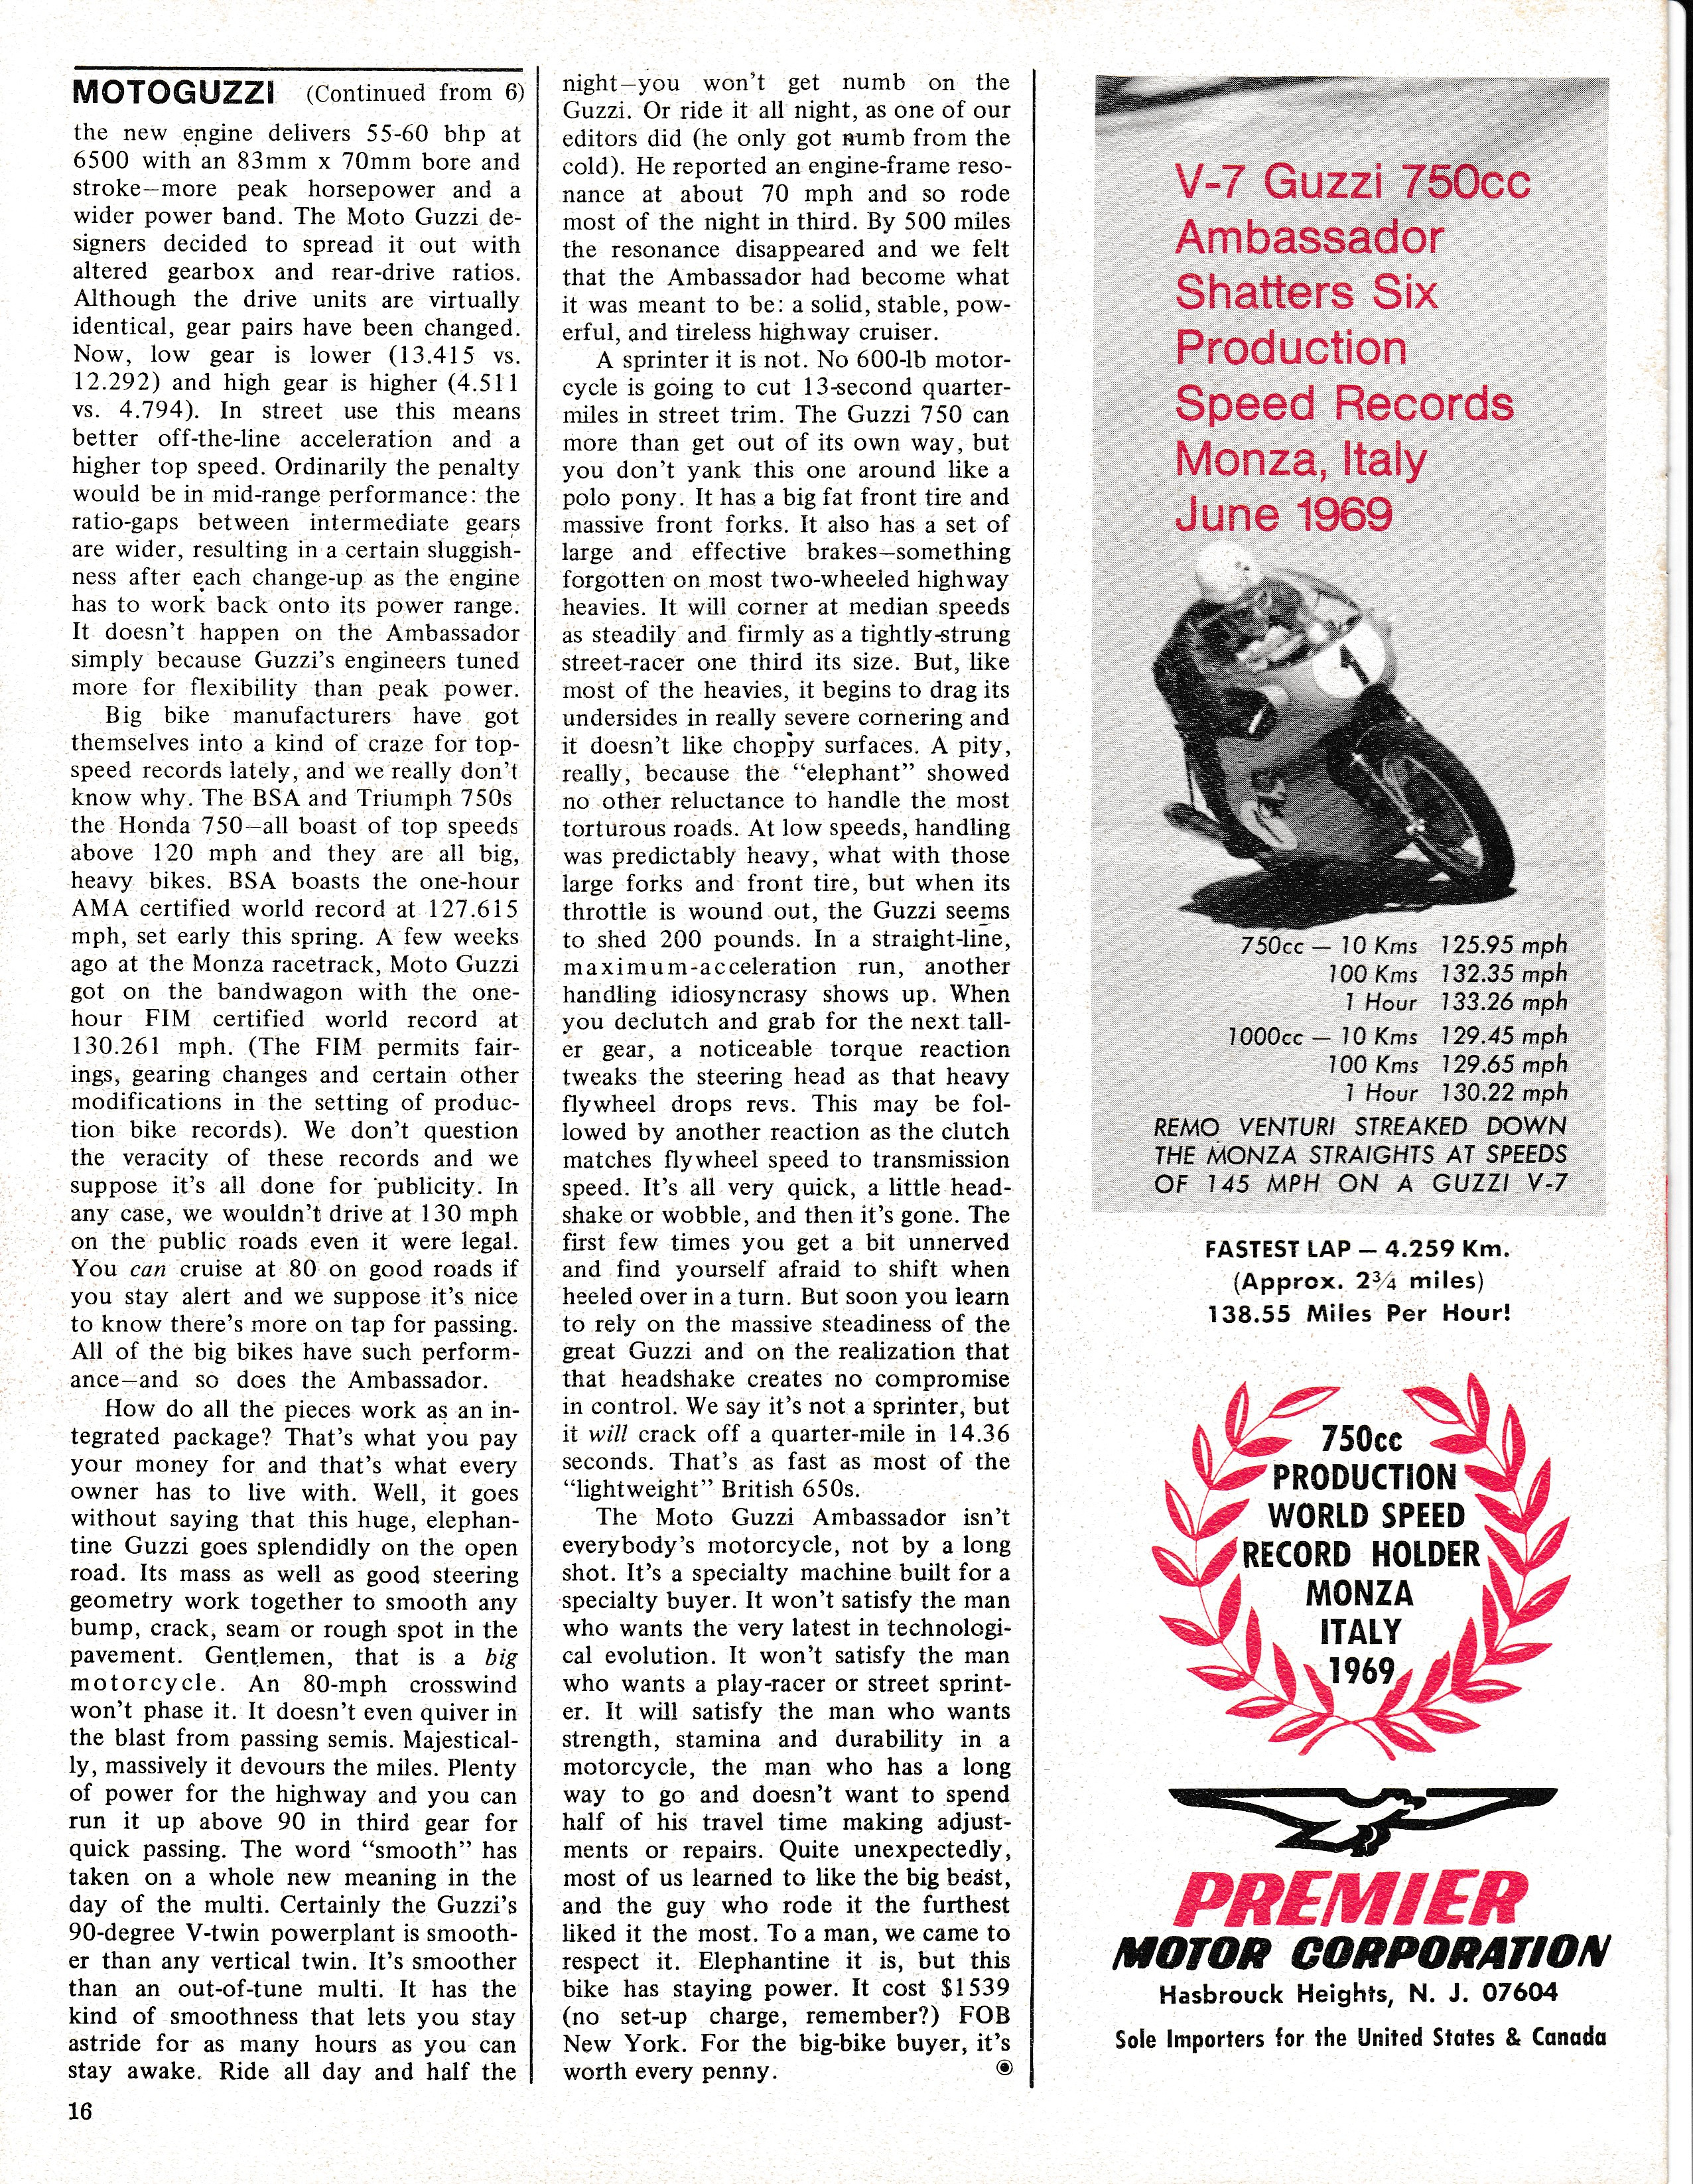 Moto Guzzi Ambassador factory brochure of magazine reviews, Page 16 of 16.